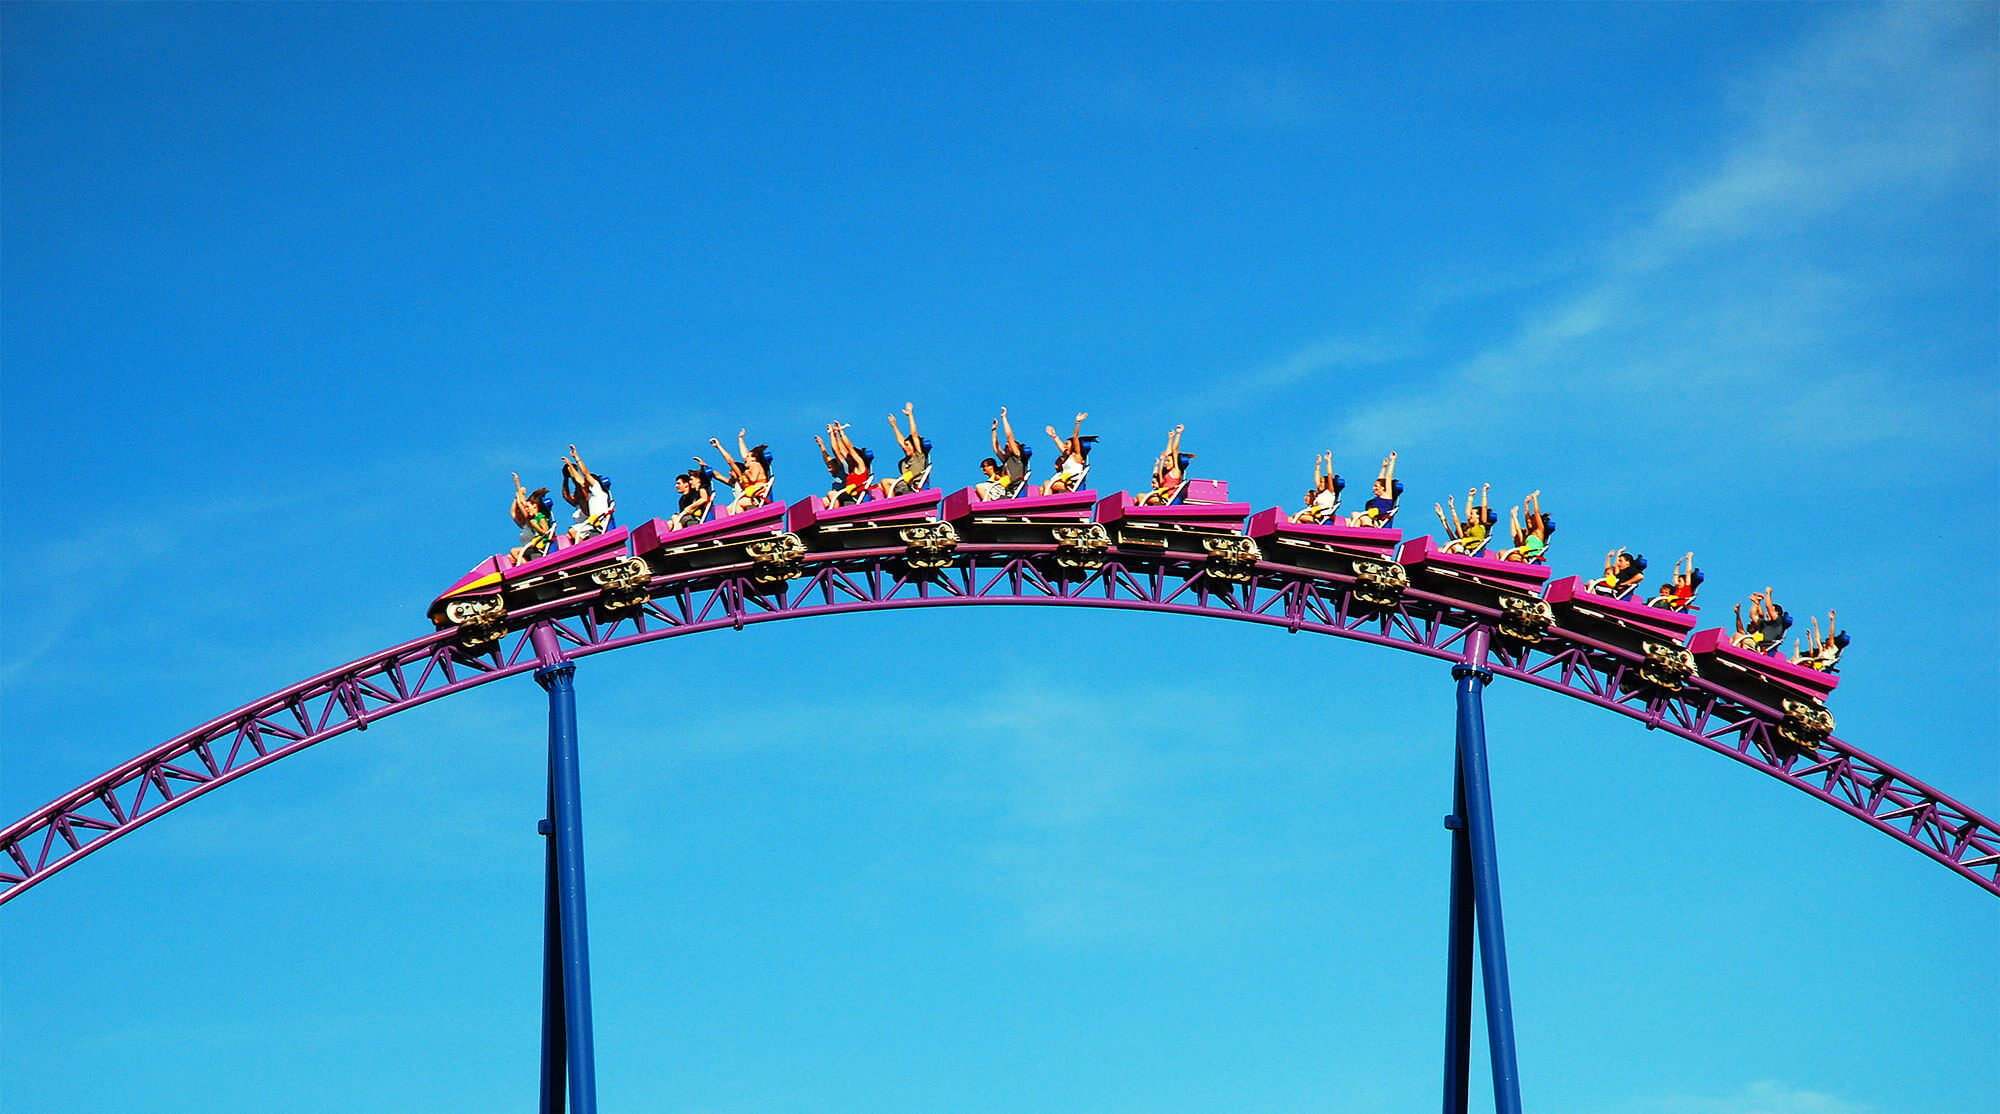 Florida, Disney dominates the international list of popular amusement parks